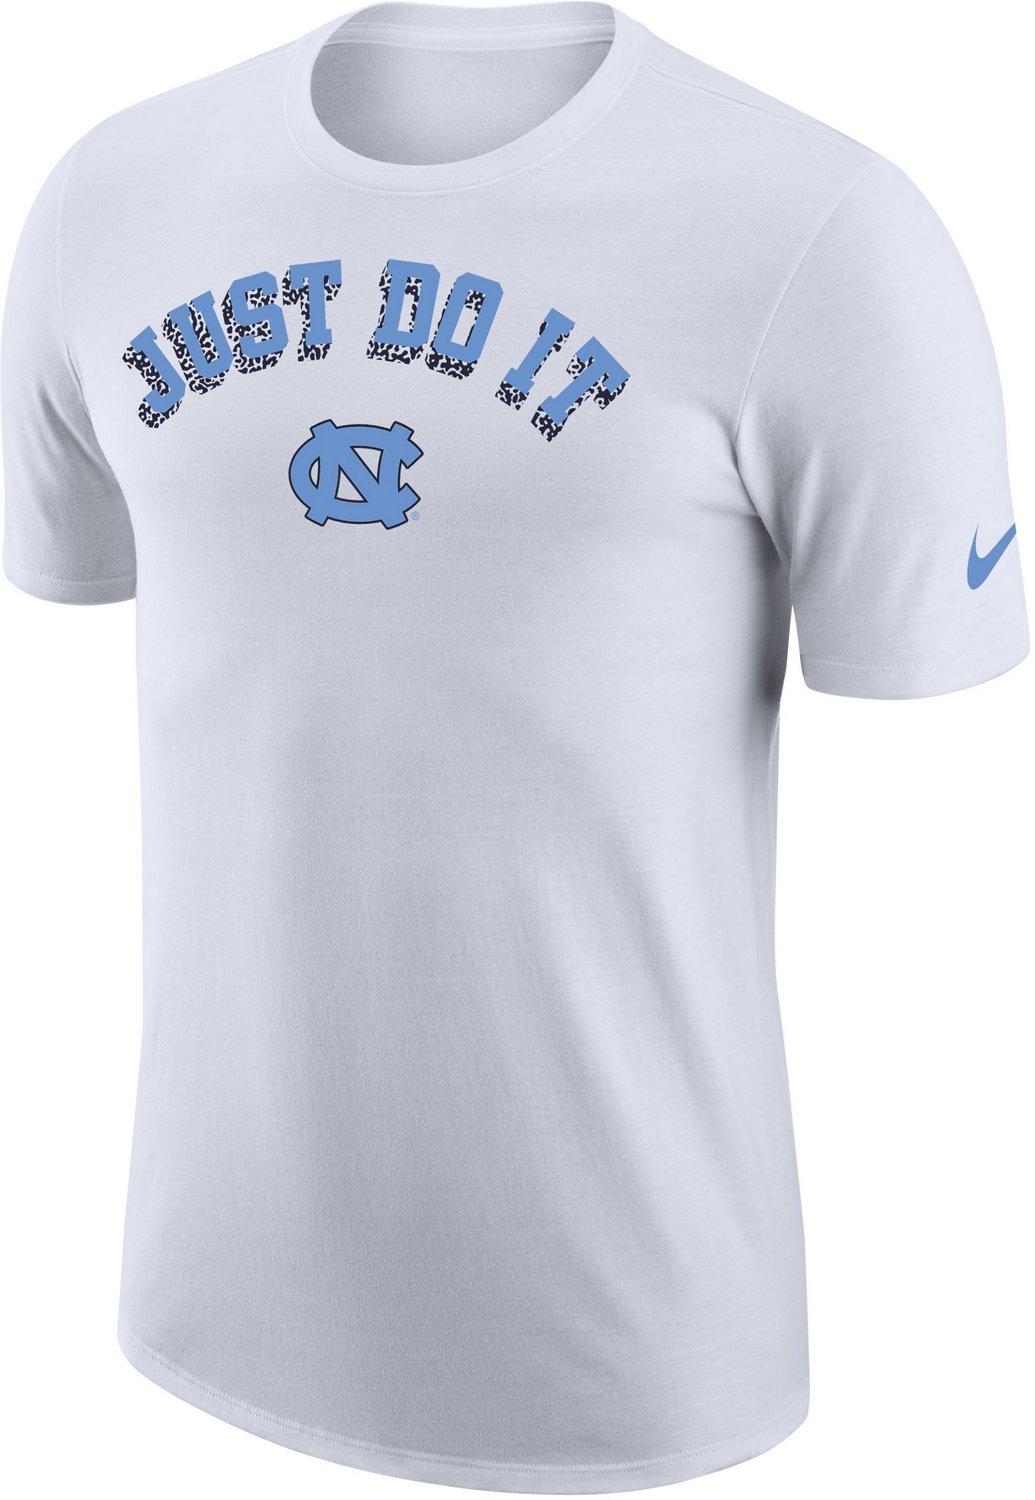 Nike Men's University of North Carolina Just Do It Graphic T-shirt ...